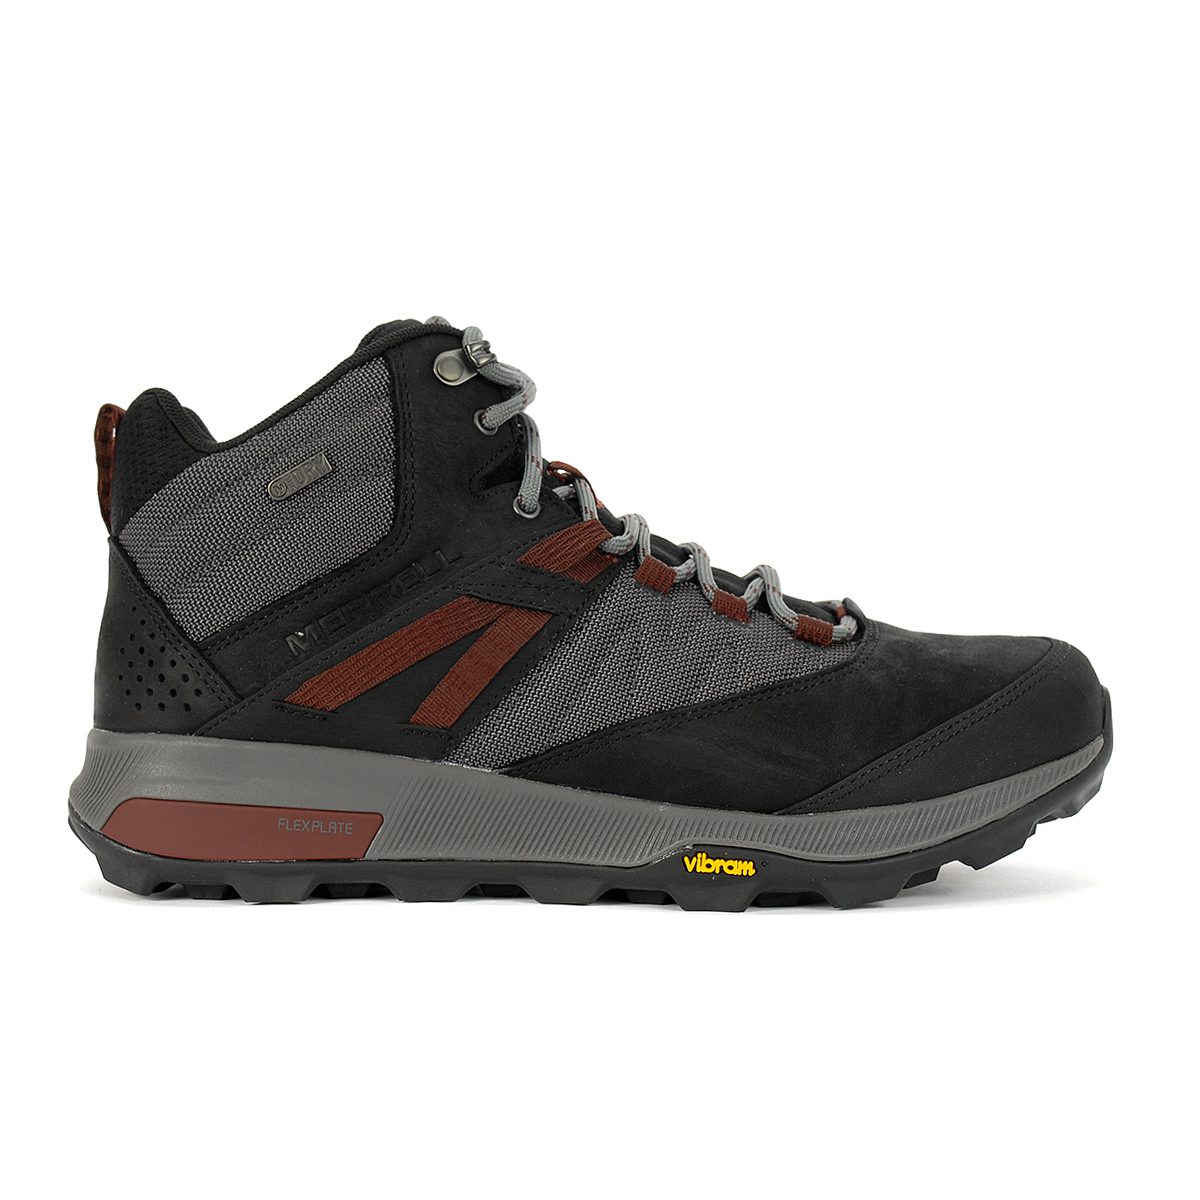 Original Merrell Zion Mid Waterproof Men's Hiking Shoes Black J16885 